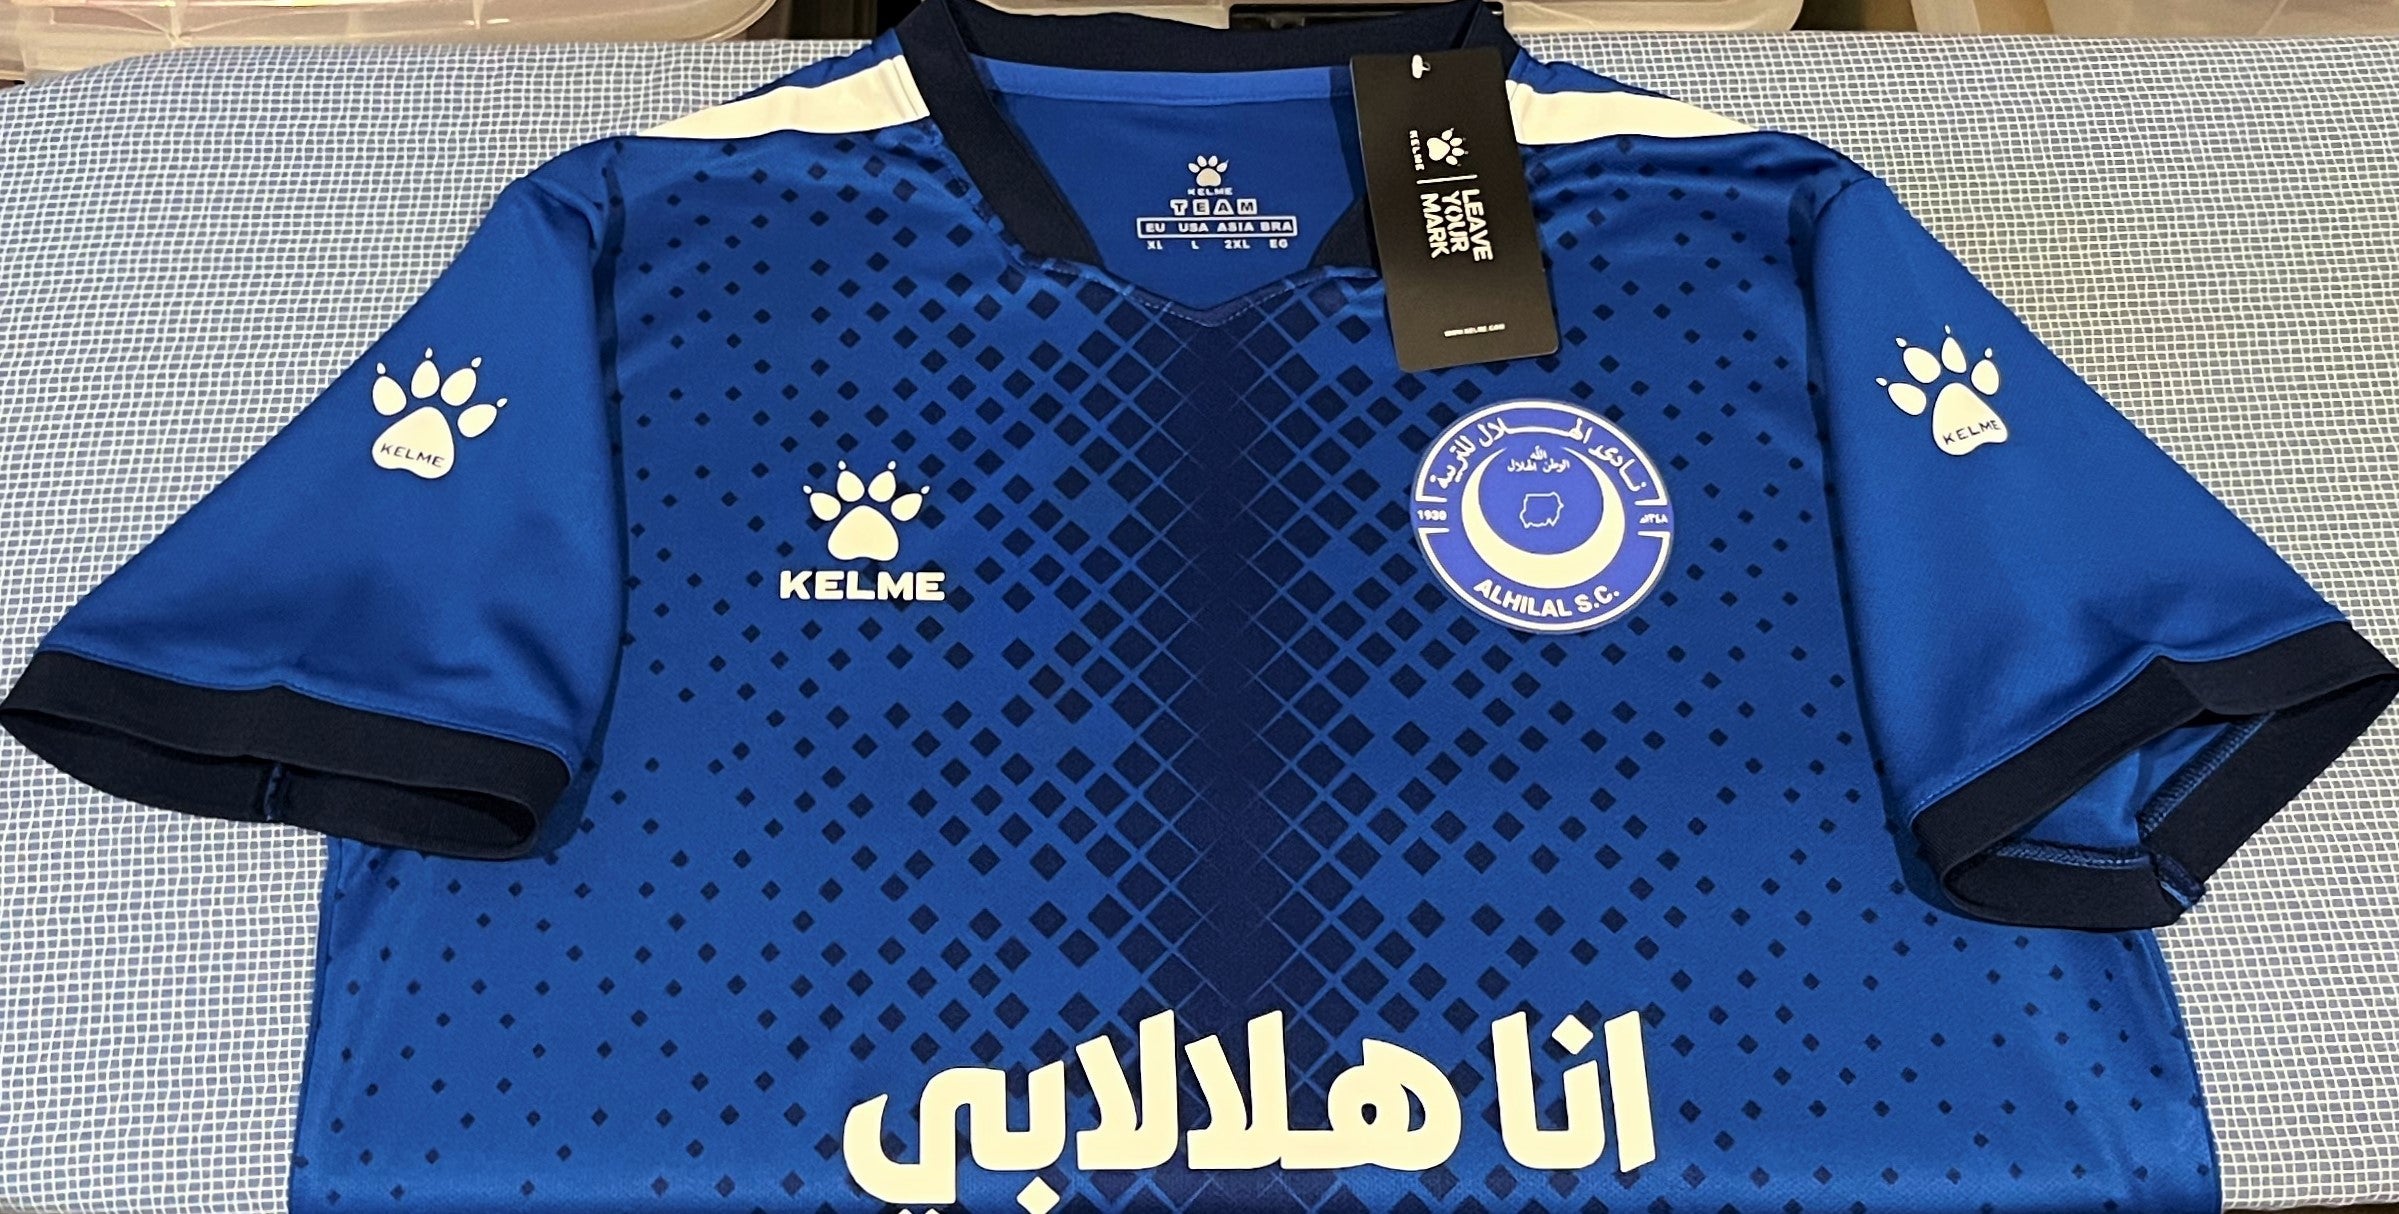 Al-Hilal Omdurman 2022-23 Home Jersey/Shirt